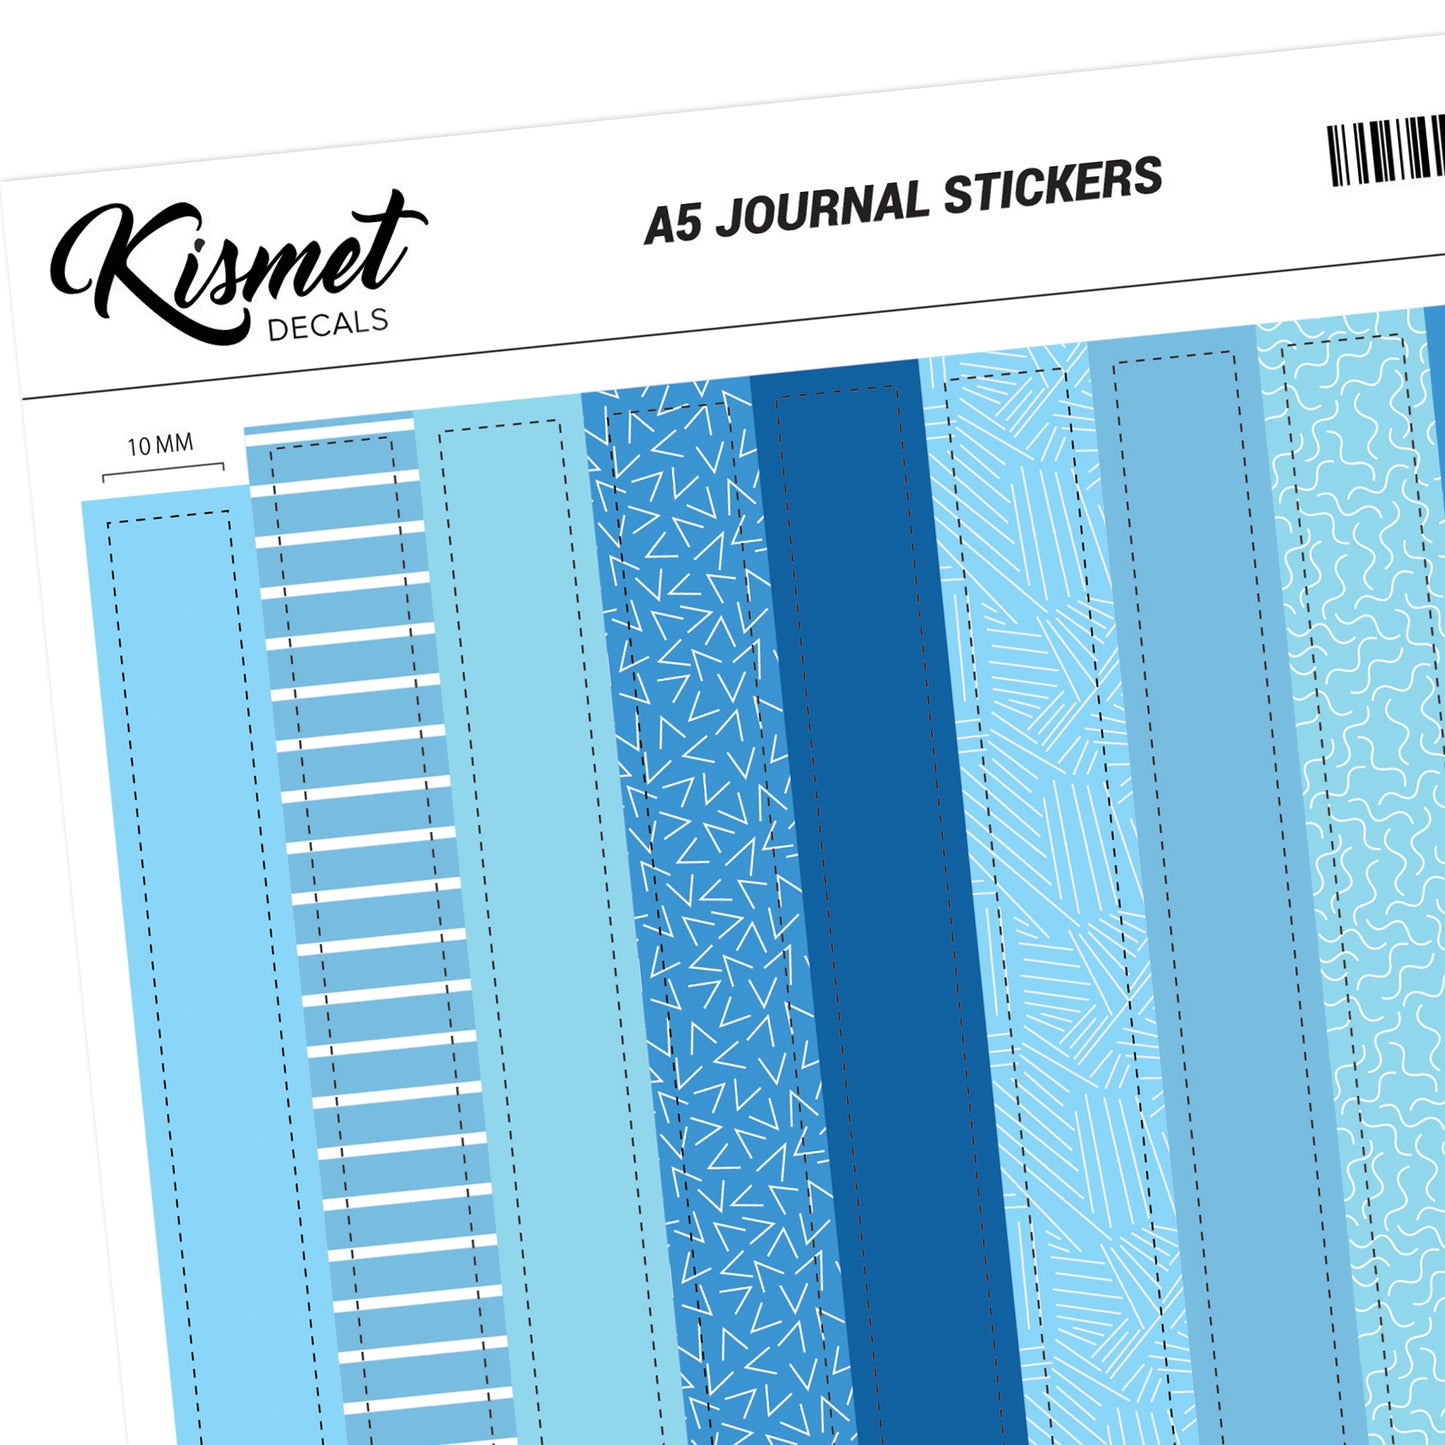 0.4" Washi Tape Design Sticker - 10 Pieces 5.3" X 8.3" - Craft Scrapbook Junk Journal Snail Mail Planner Journal Diary Paper Sticker Sheet